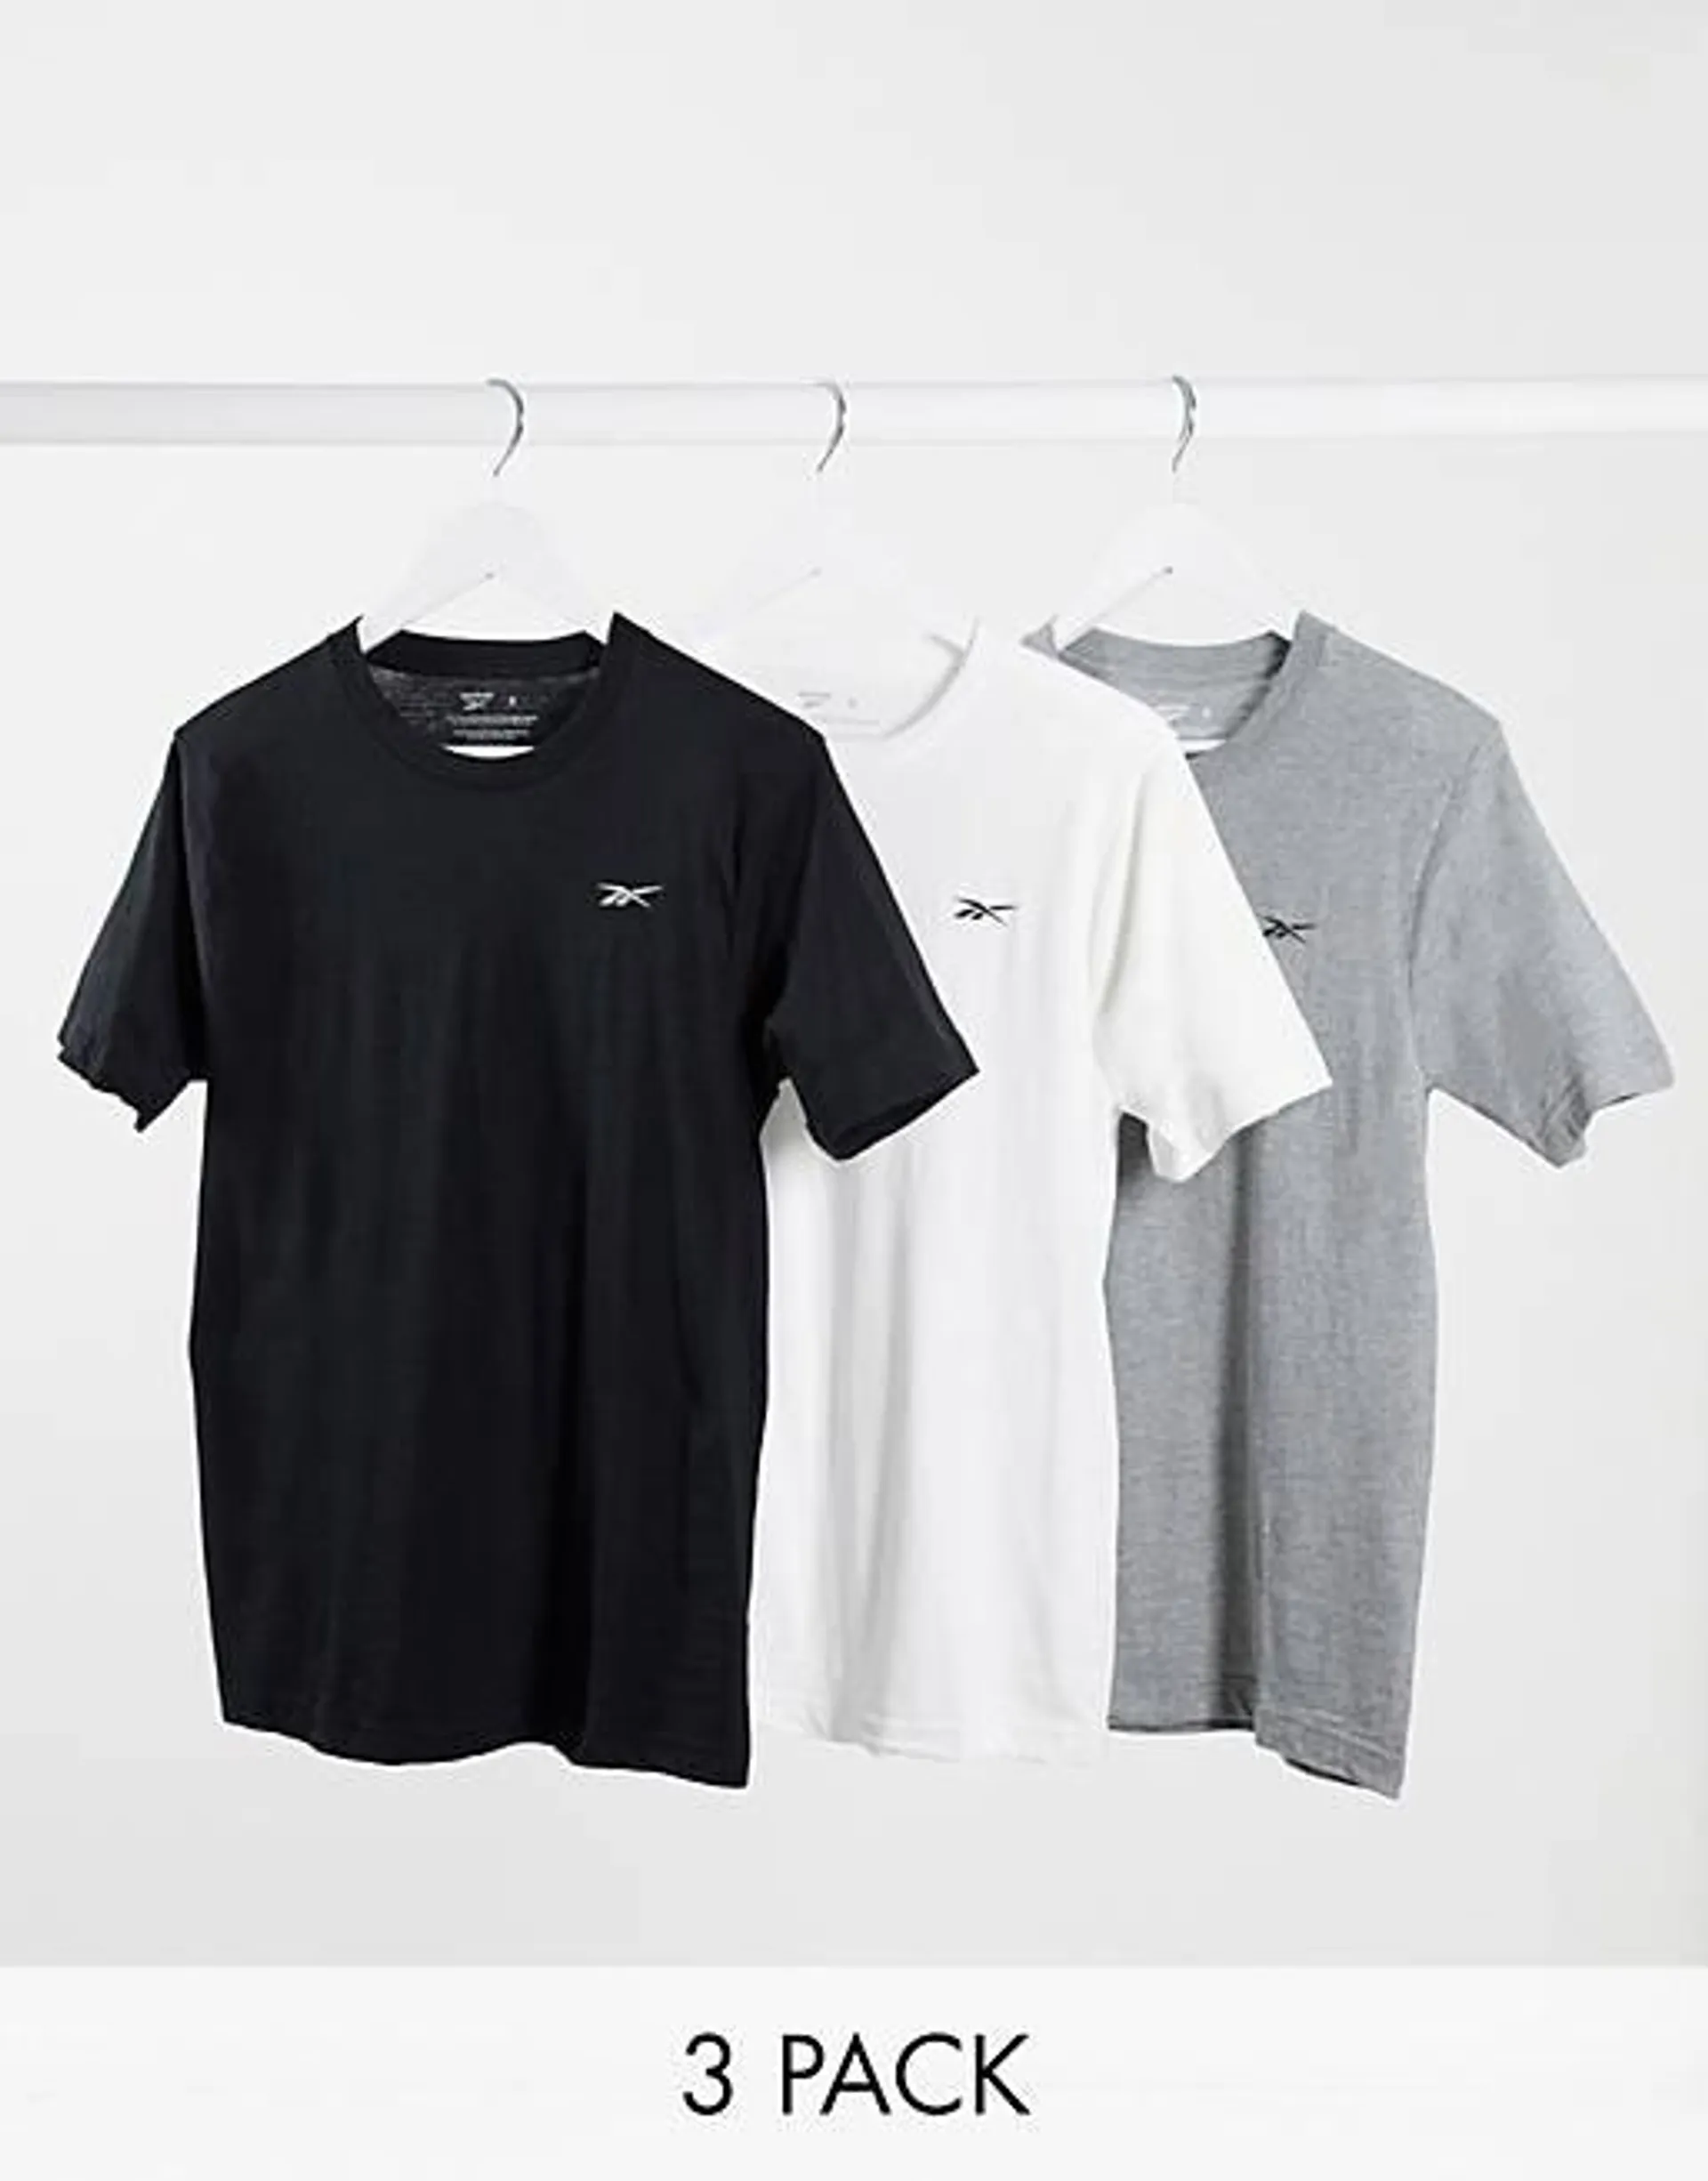 Reebok 3 pack t-shirts in black white & grey